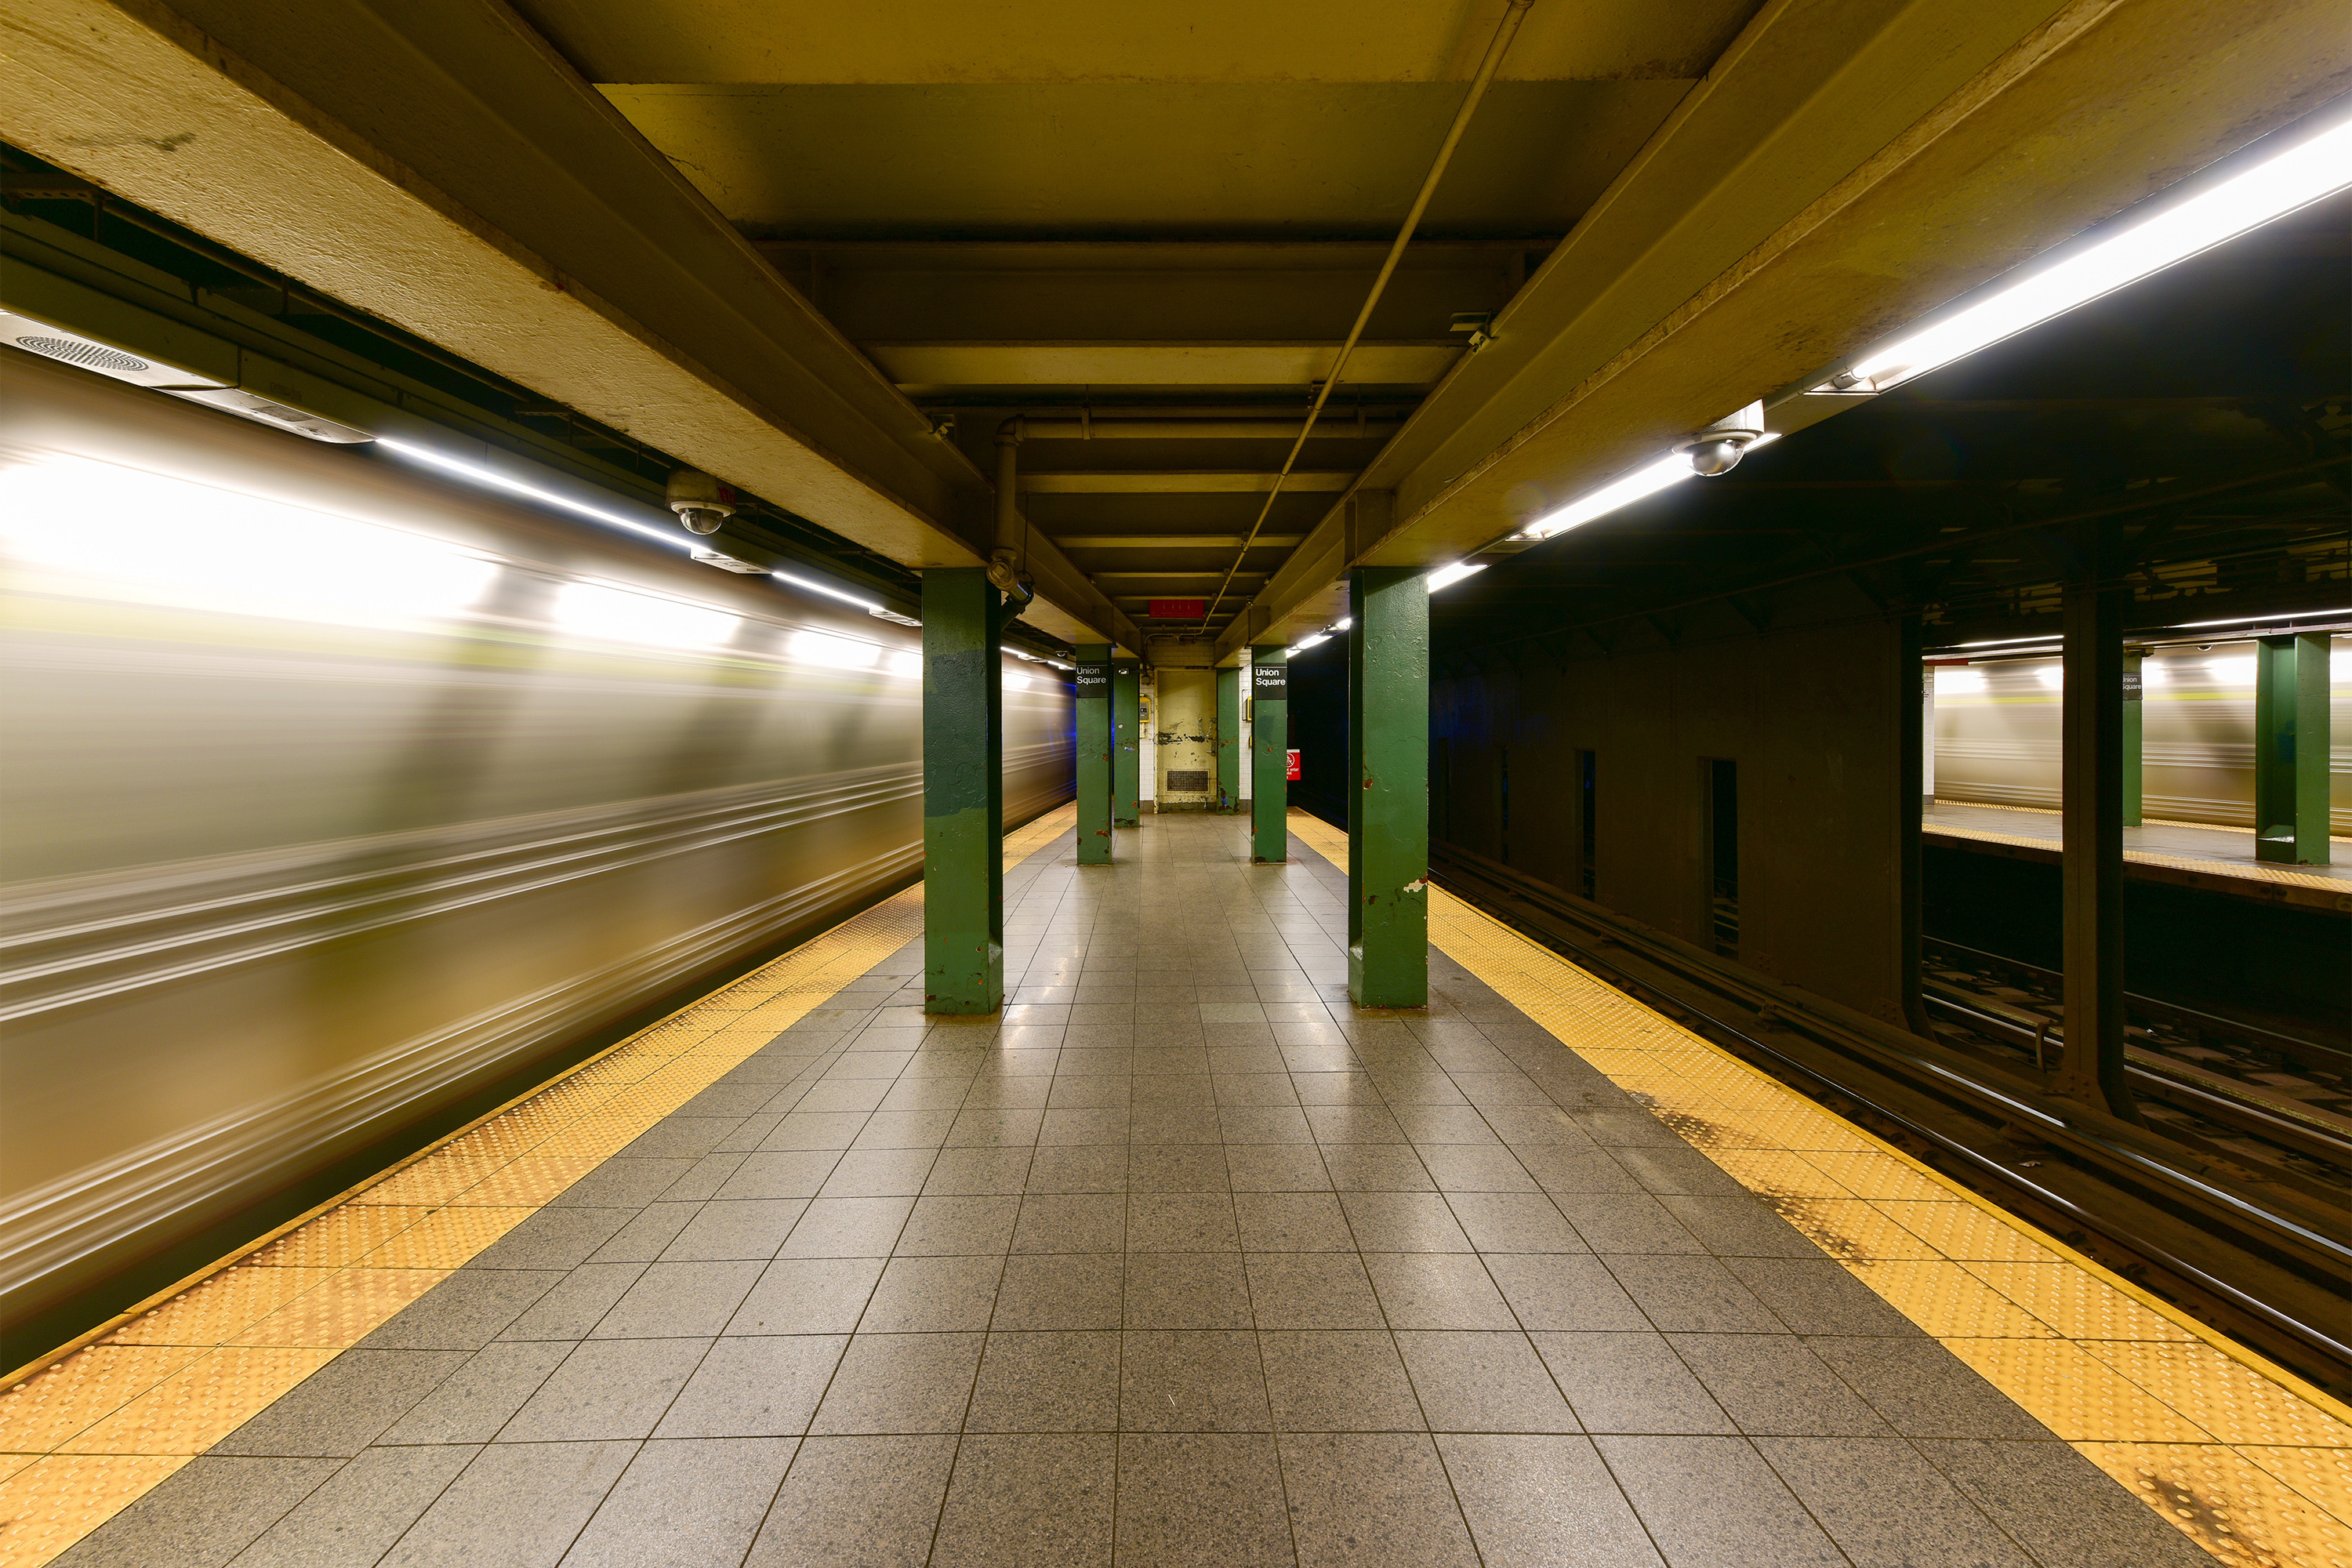 Man hanged himself in subway station